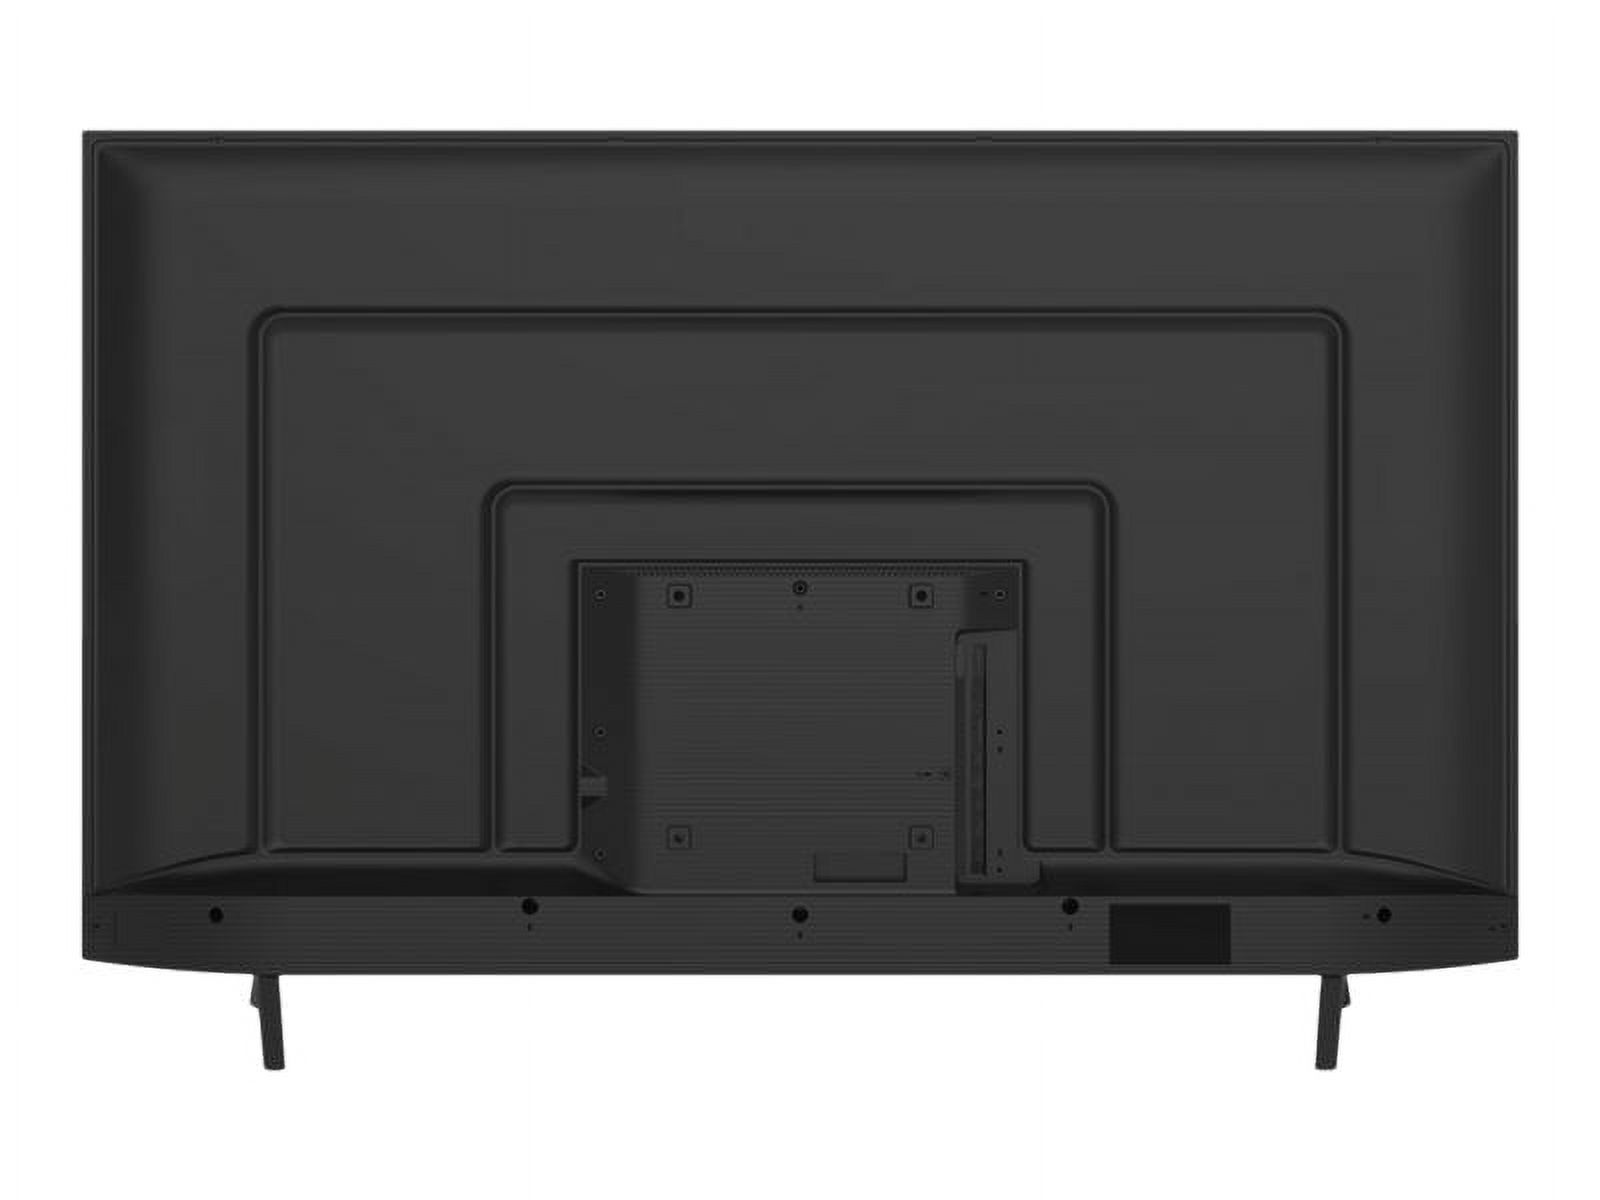 Hisense 58H6550E - 58" Diagonal Class (57.5" viewable) - H65 Series LED-backlit LCD TV - Smart TV - Android TV - 4K UHD (2160p) 3840 x 2160 - HDR - direct-lit LED - image 4 of 7